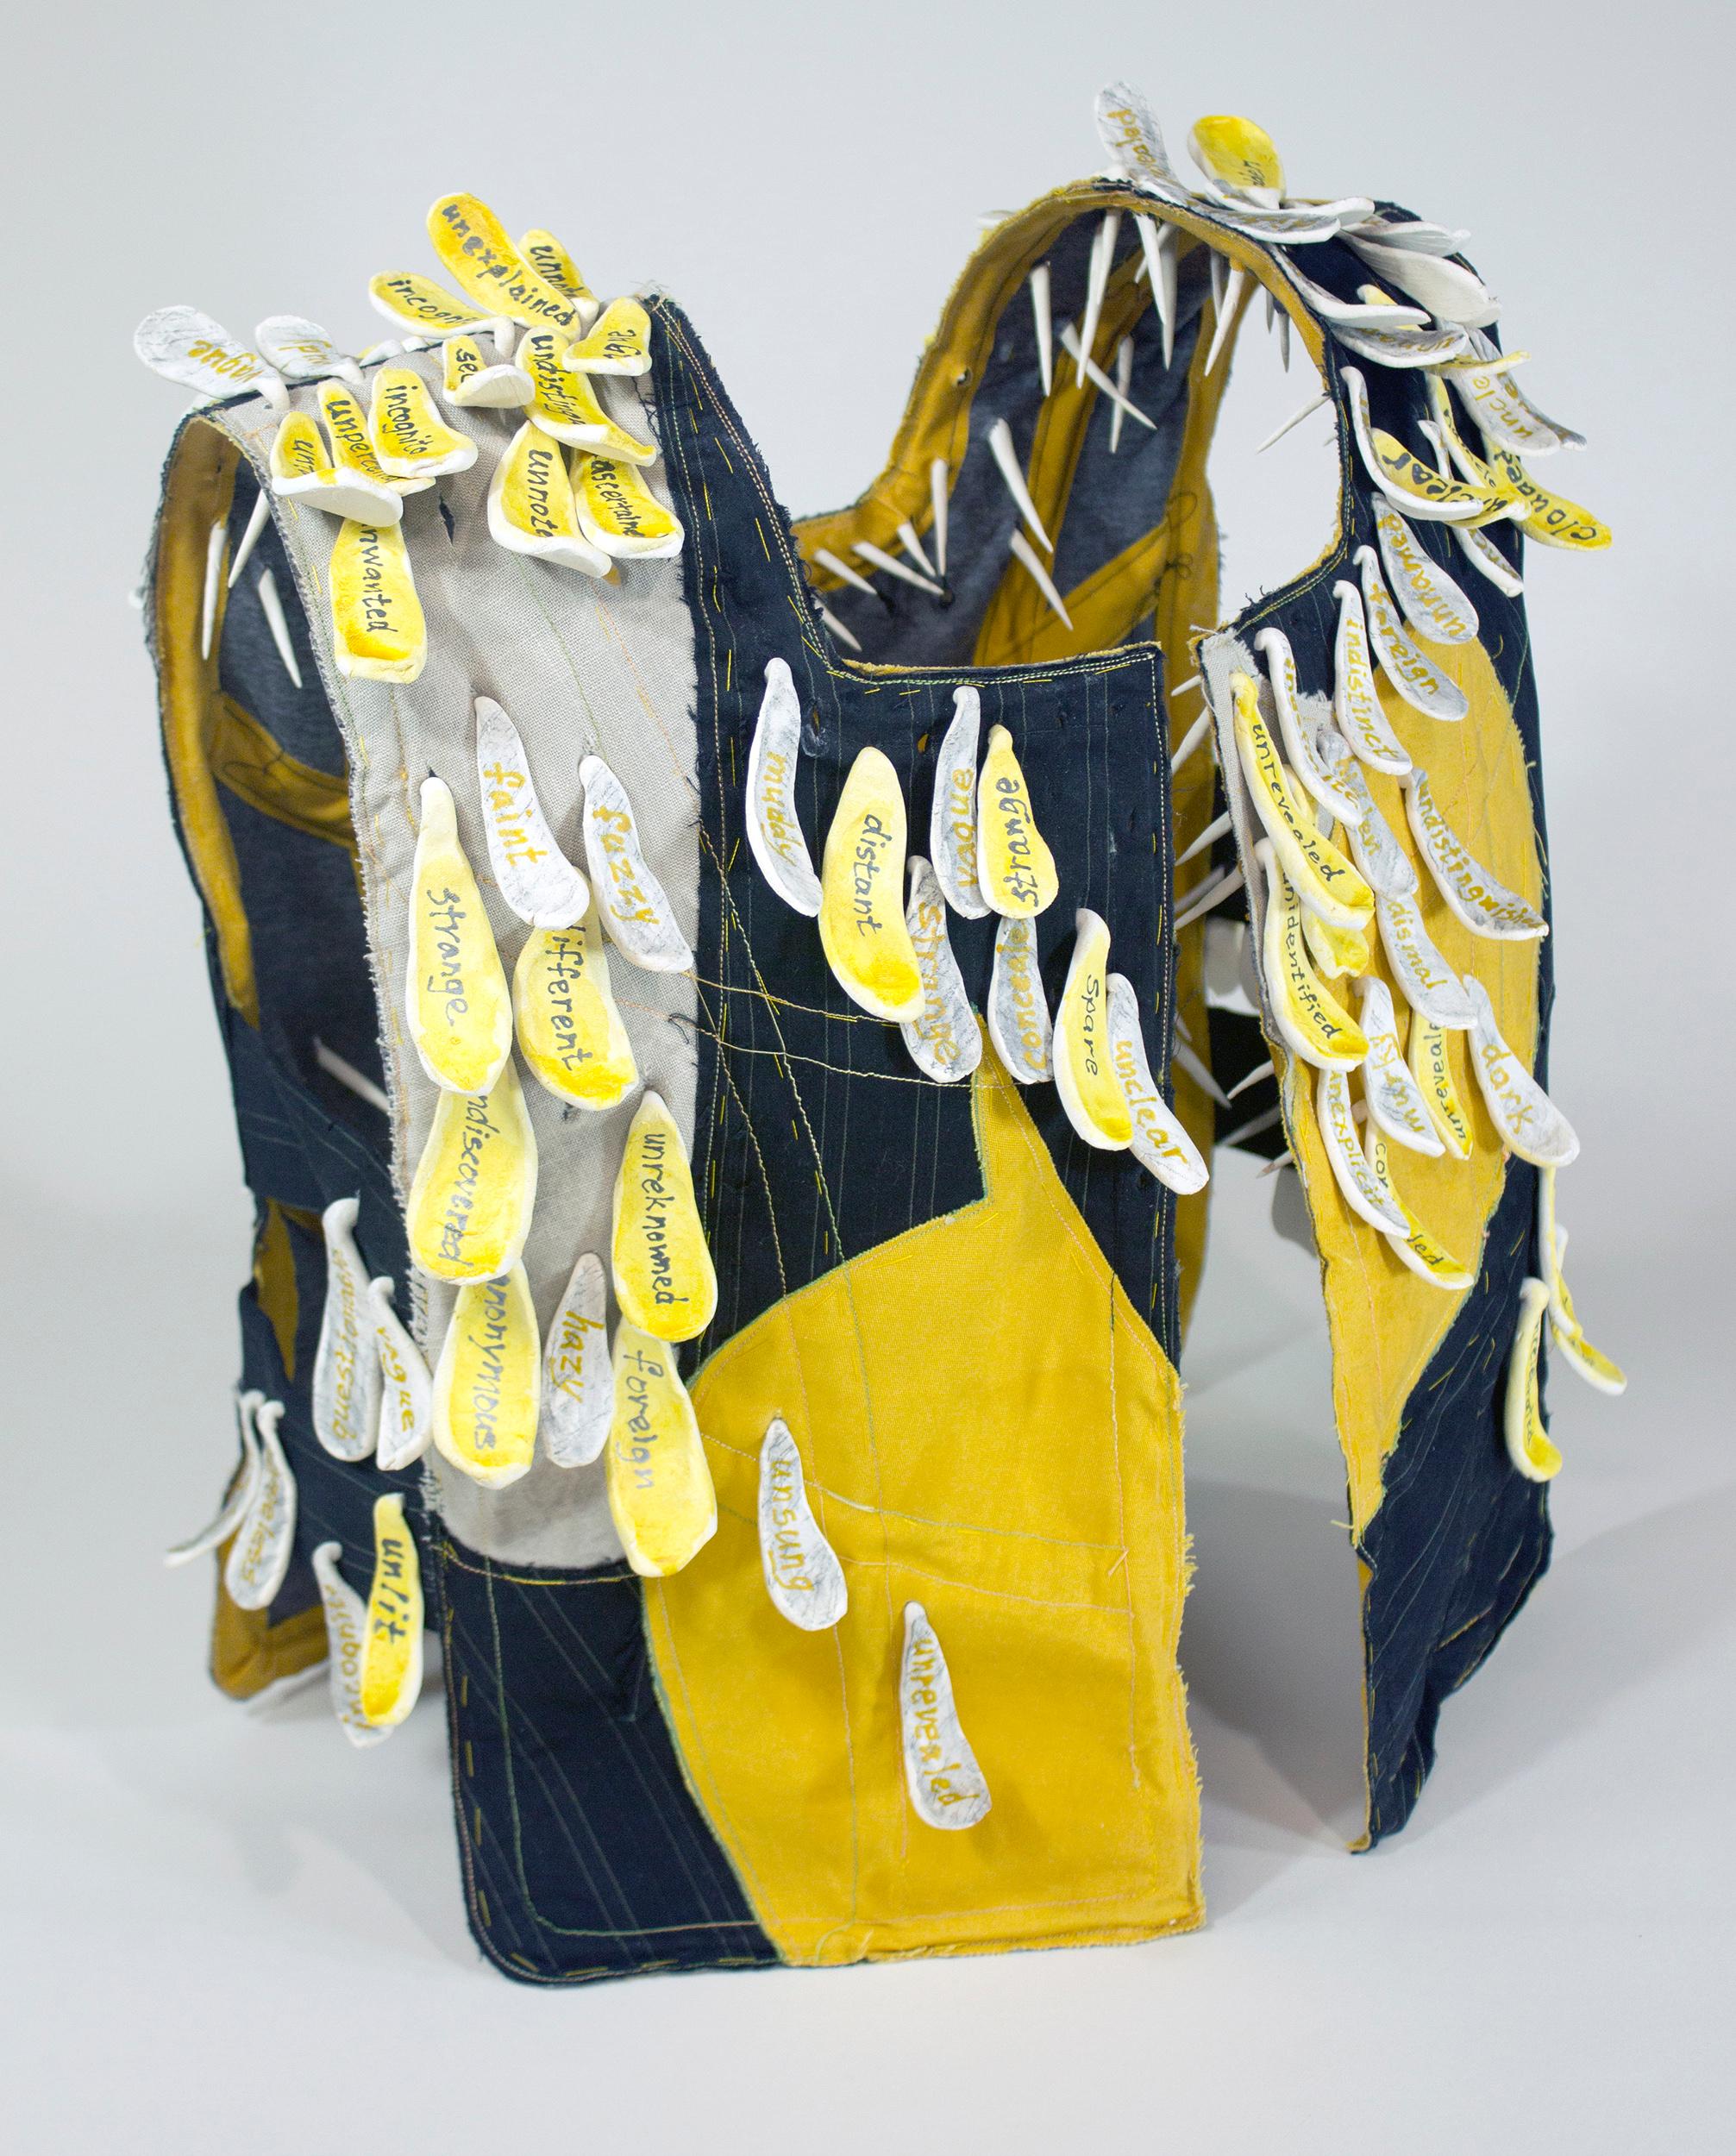 "Caution", céramique, gilet, noir, brillant, jaune, technique mixte, sculpture - Mixed Media Art de Virginia Mahoney